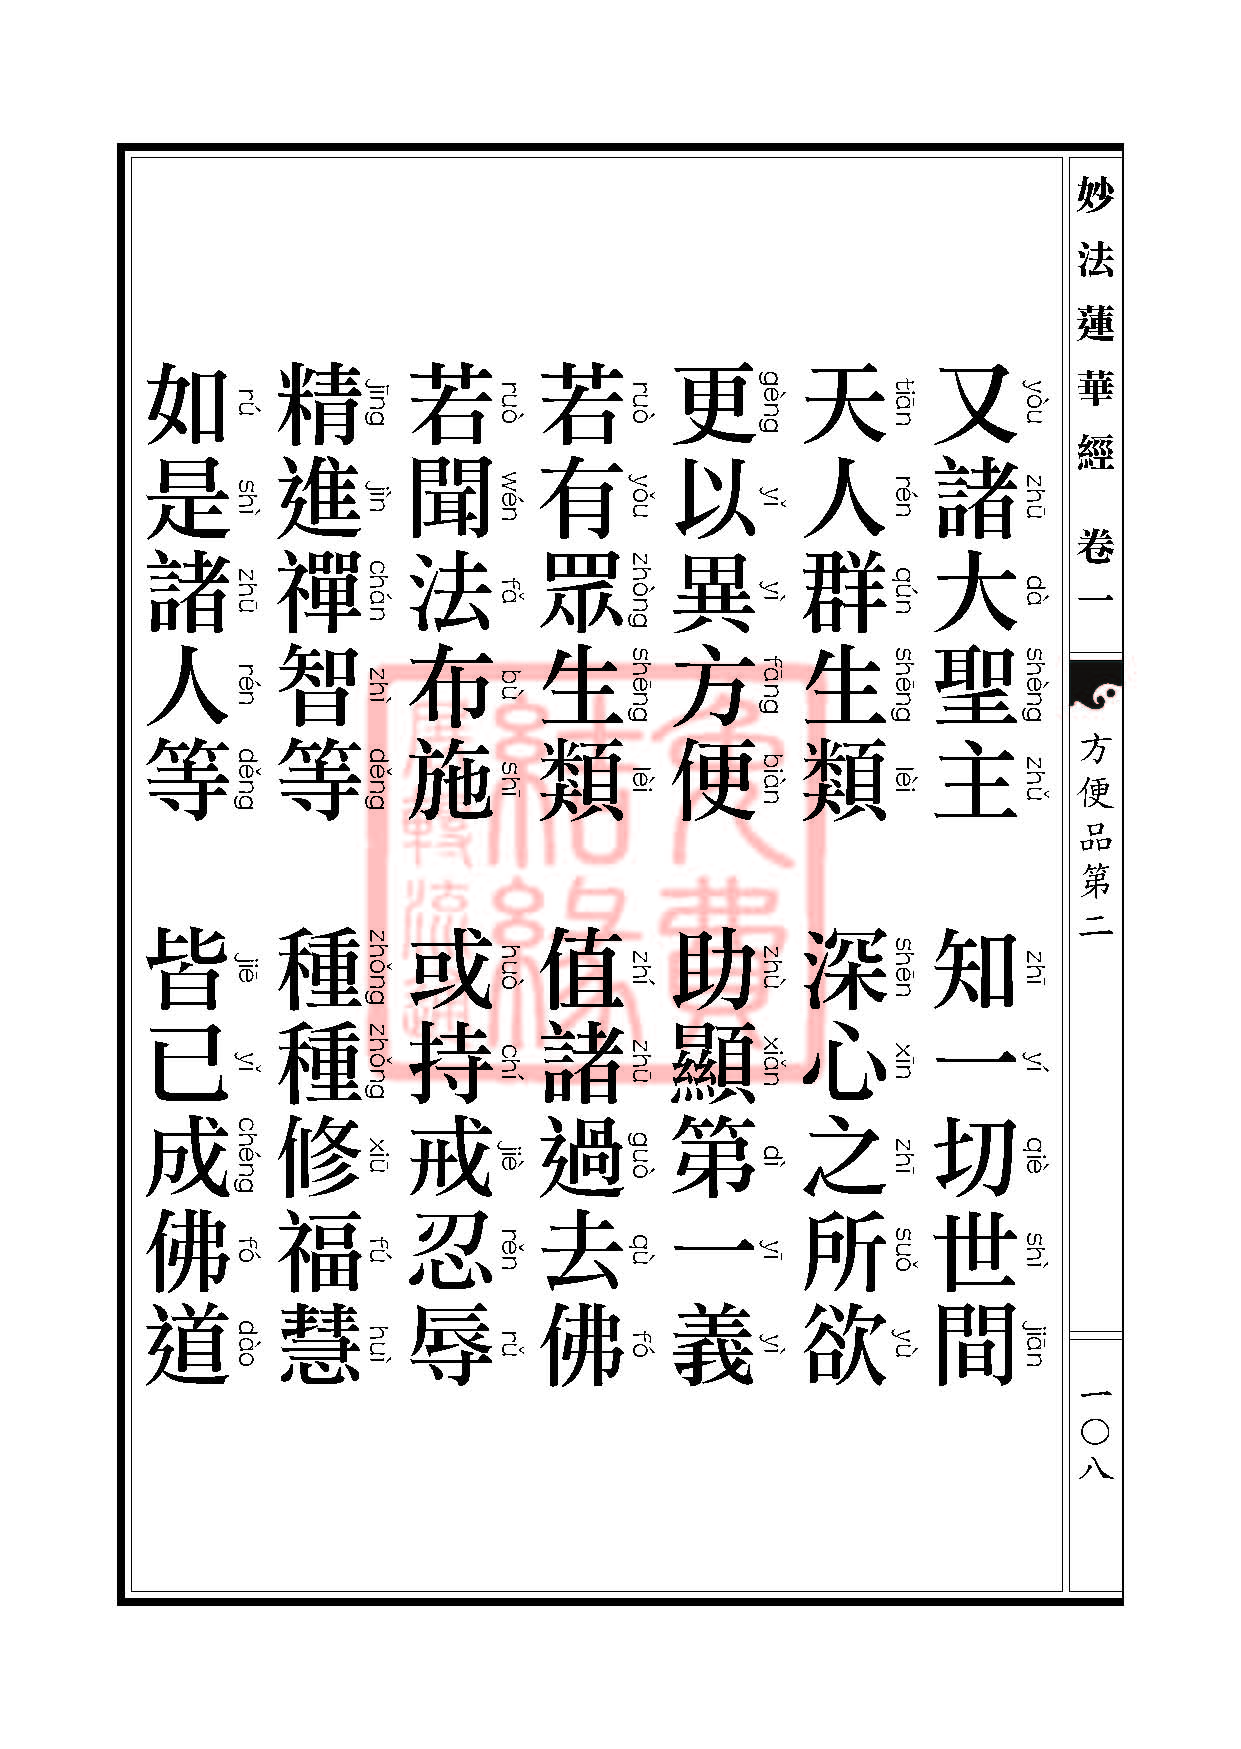 Book_FHJ_HK-A6-PY_Web_ҳ_108.jpg